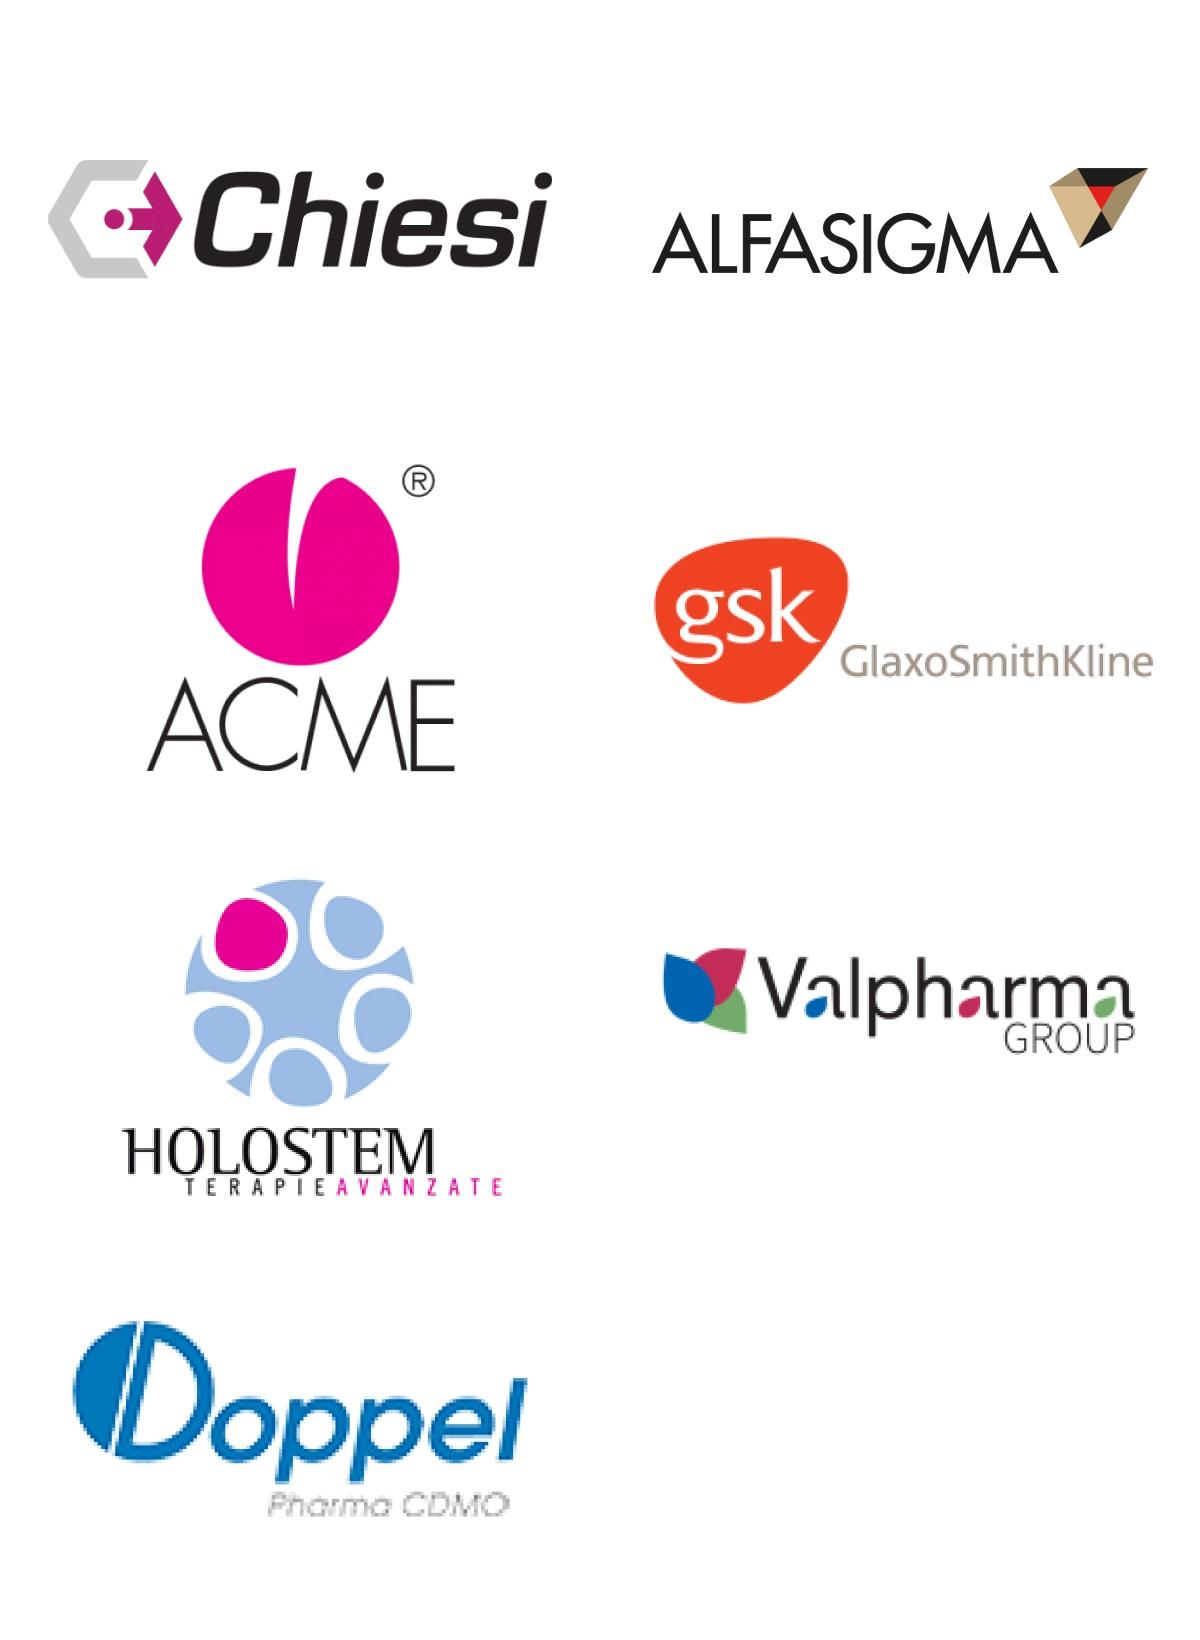 Immagini loghi top brand colonna pharma: Chiesi, Alfasigma, ACME, Gsk, Holostem, Valpharma, Doppel